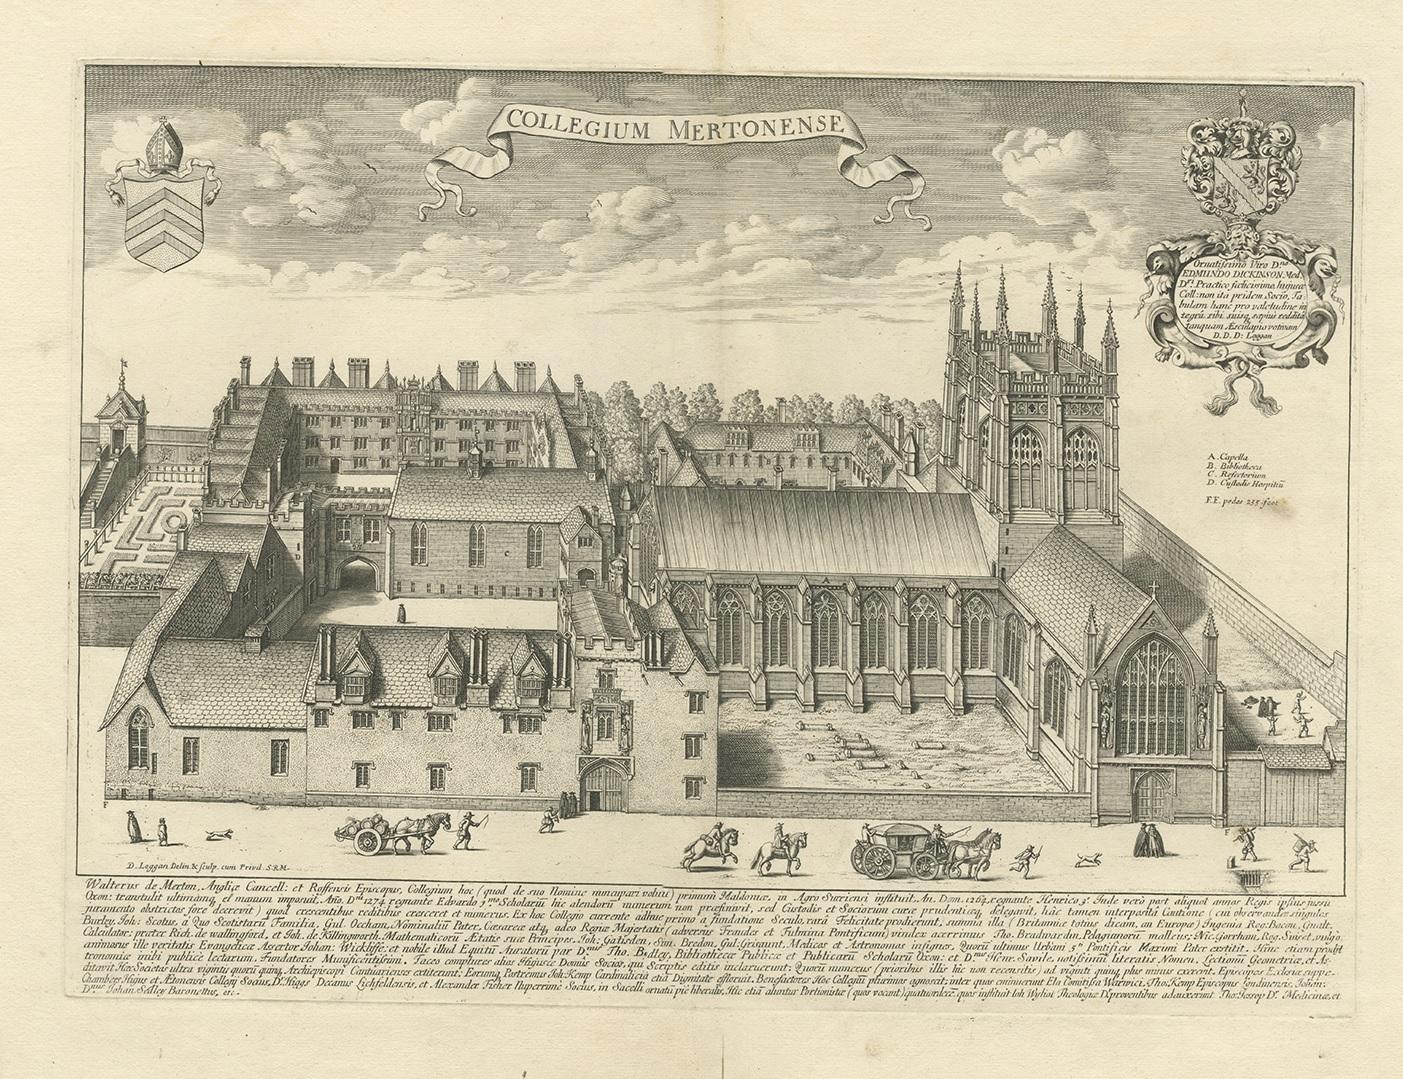 Antique print titled 'Collegium Mertonense'. View of Merton College, Oxford, England. This print originates from 'Oxonia Illustrata' by David Loggan, published 1675.